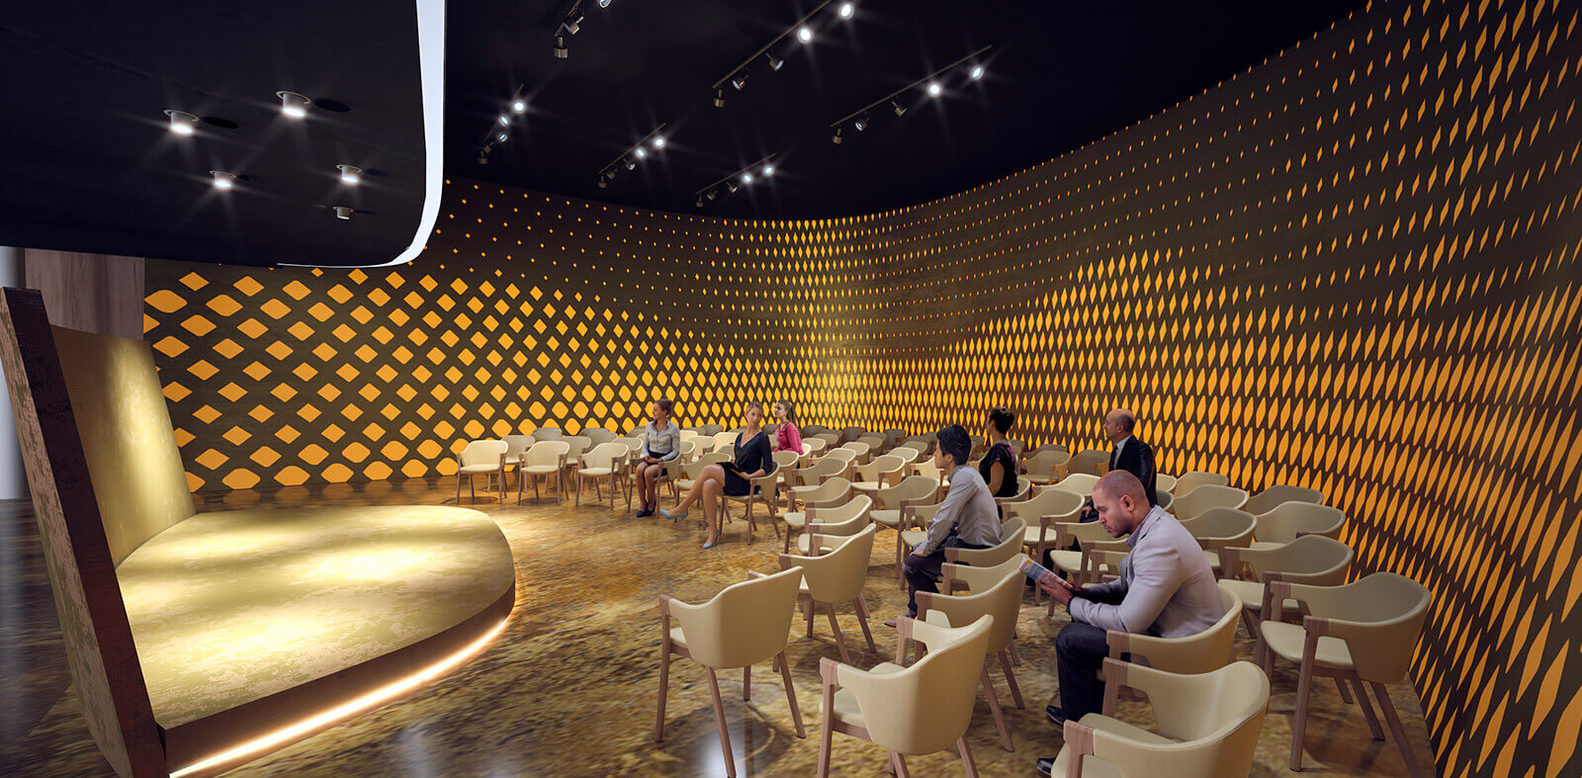 Peru Pavilion inside expo 2020 images